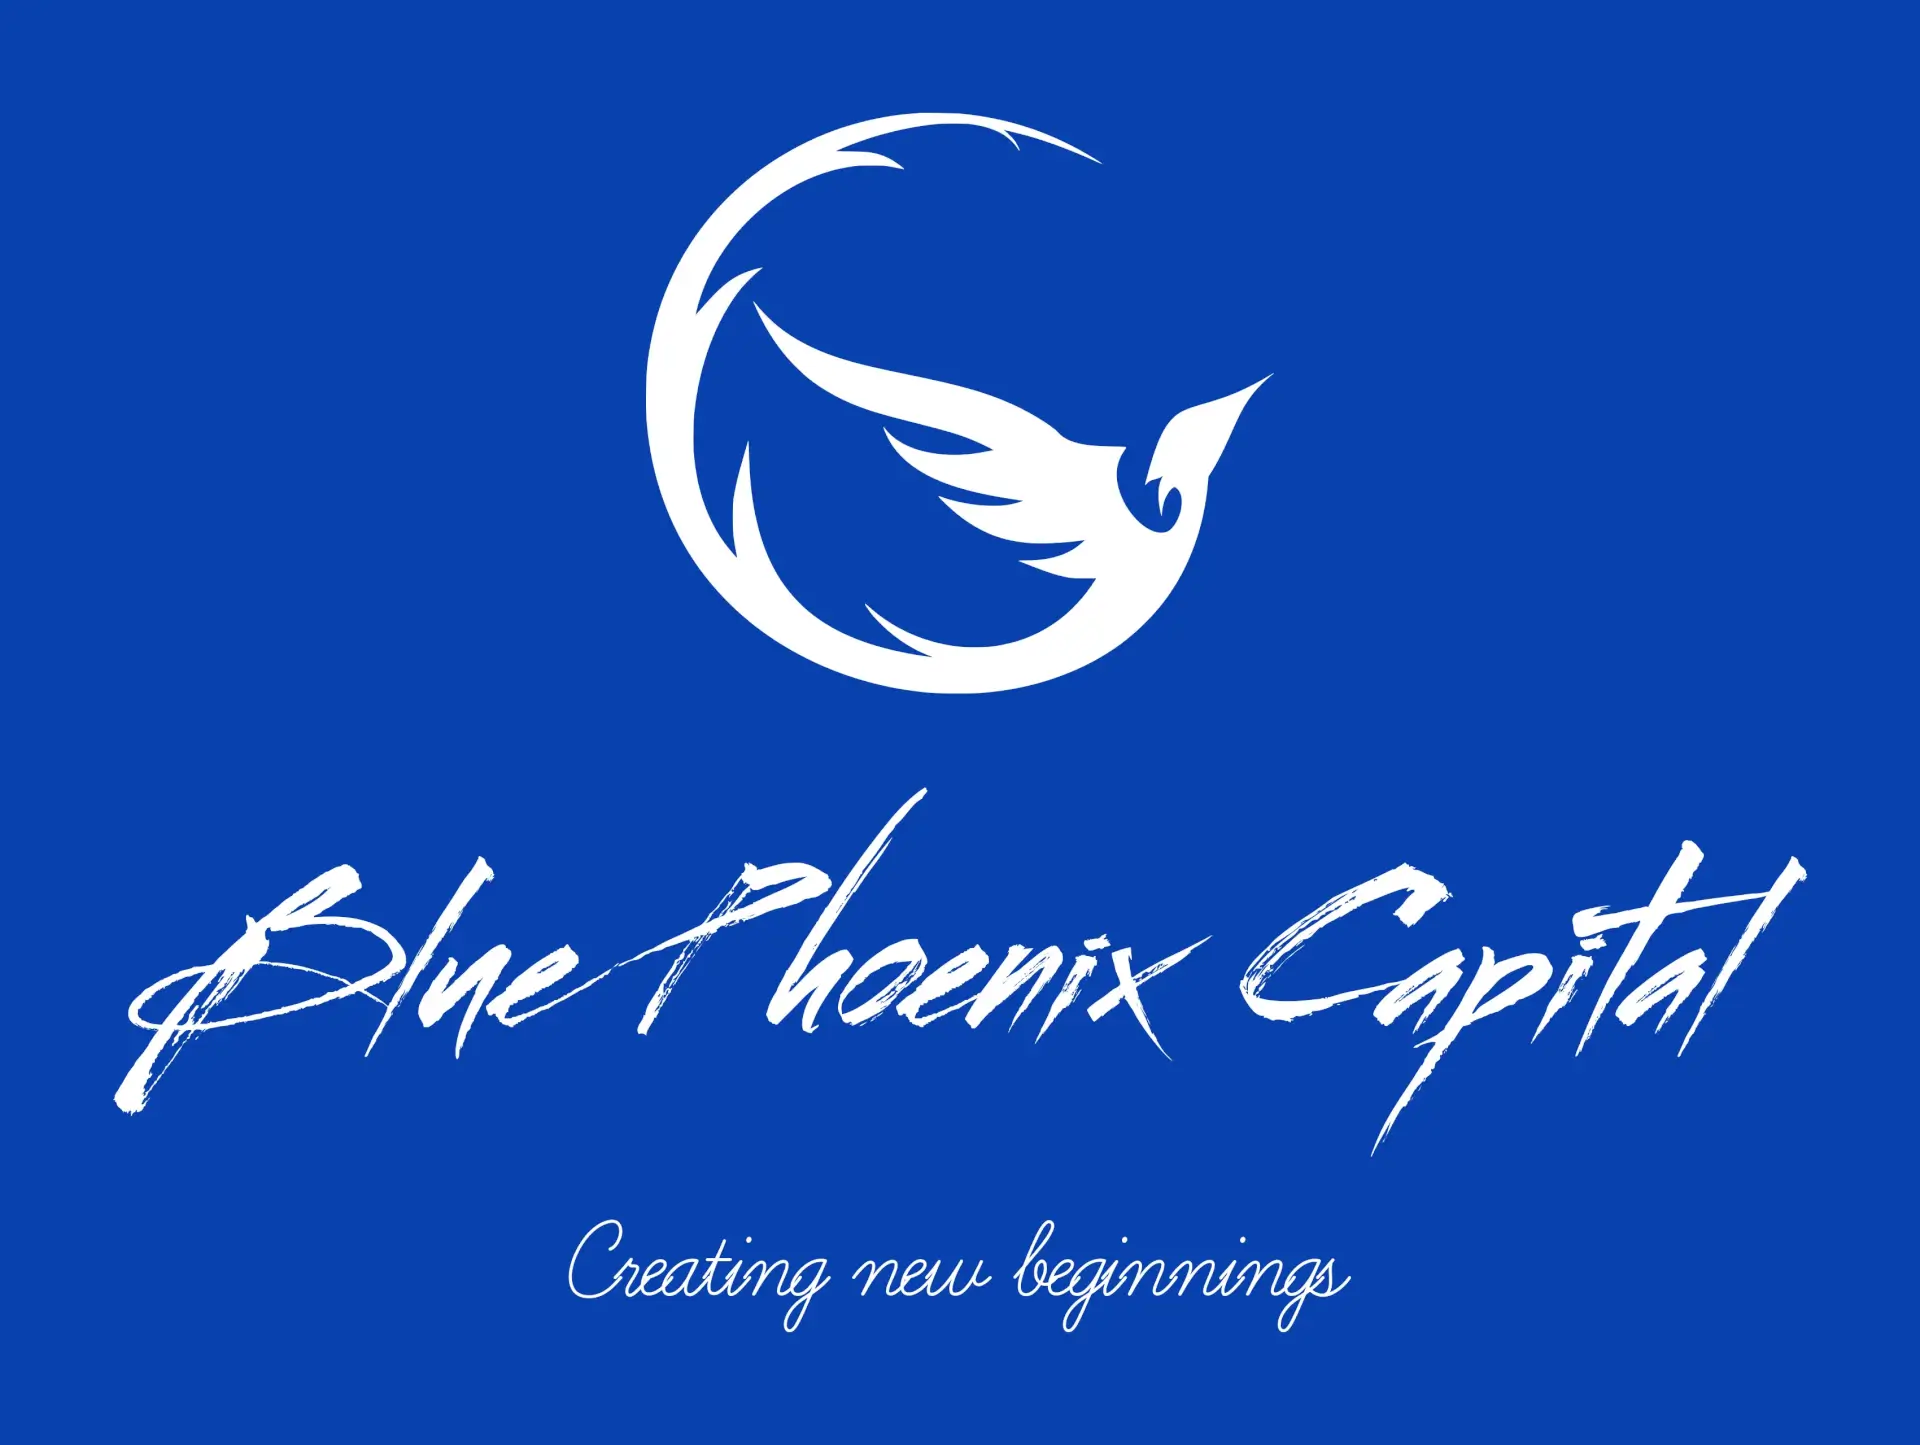 Blue Phoenix Capital